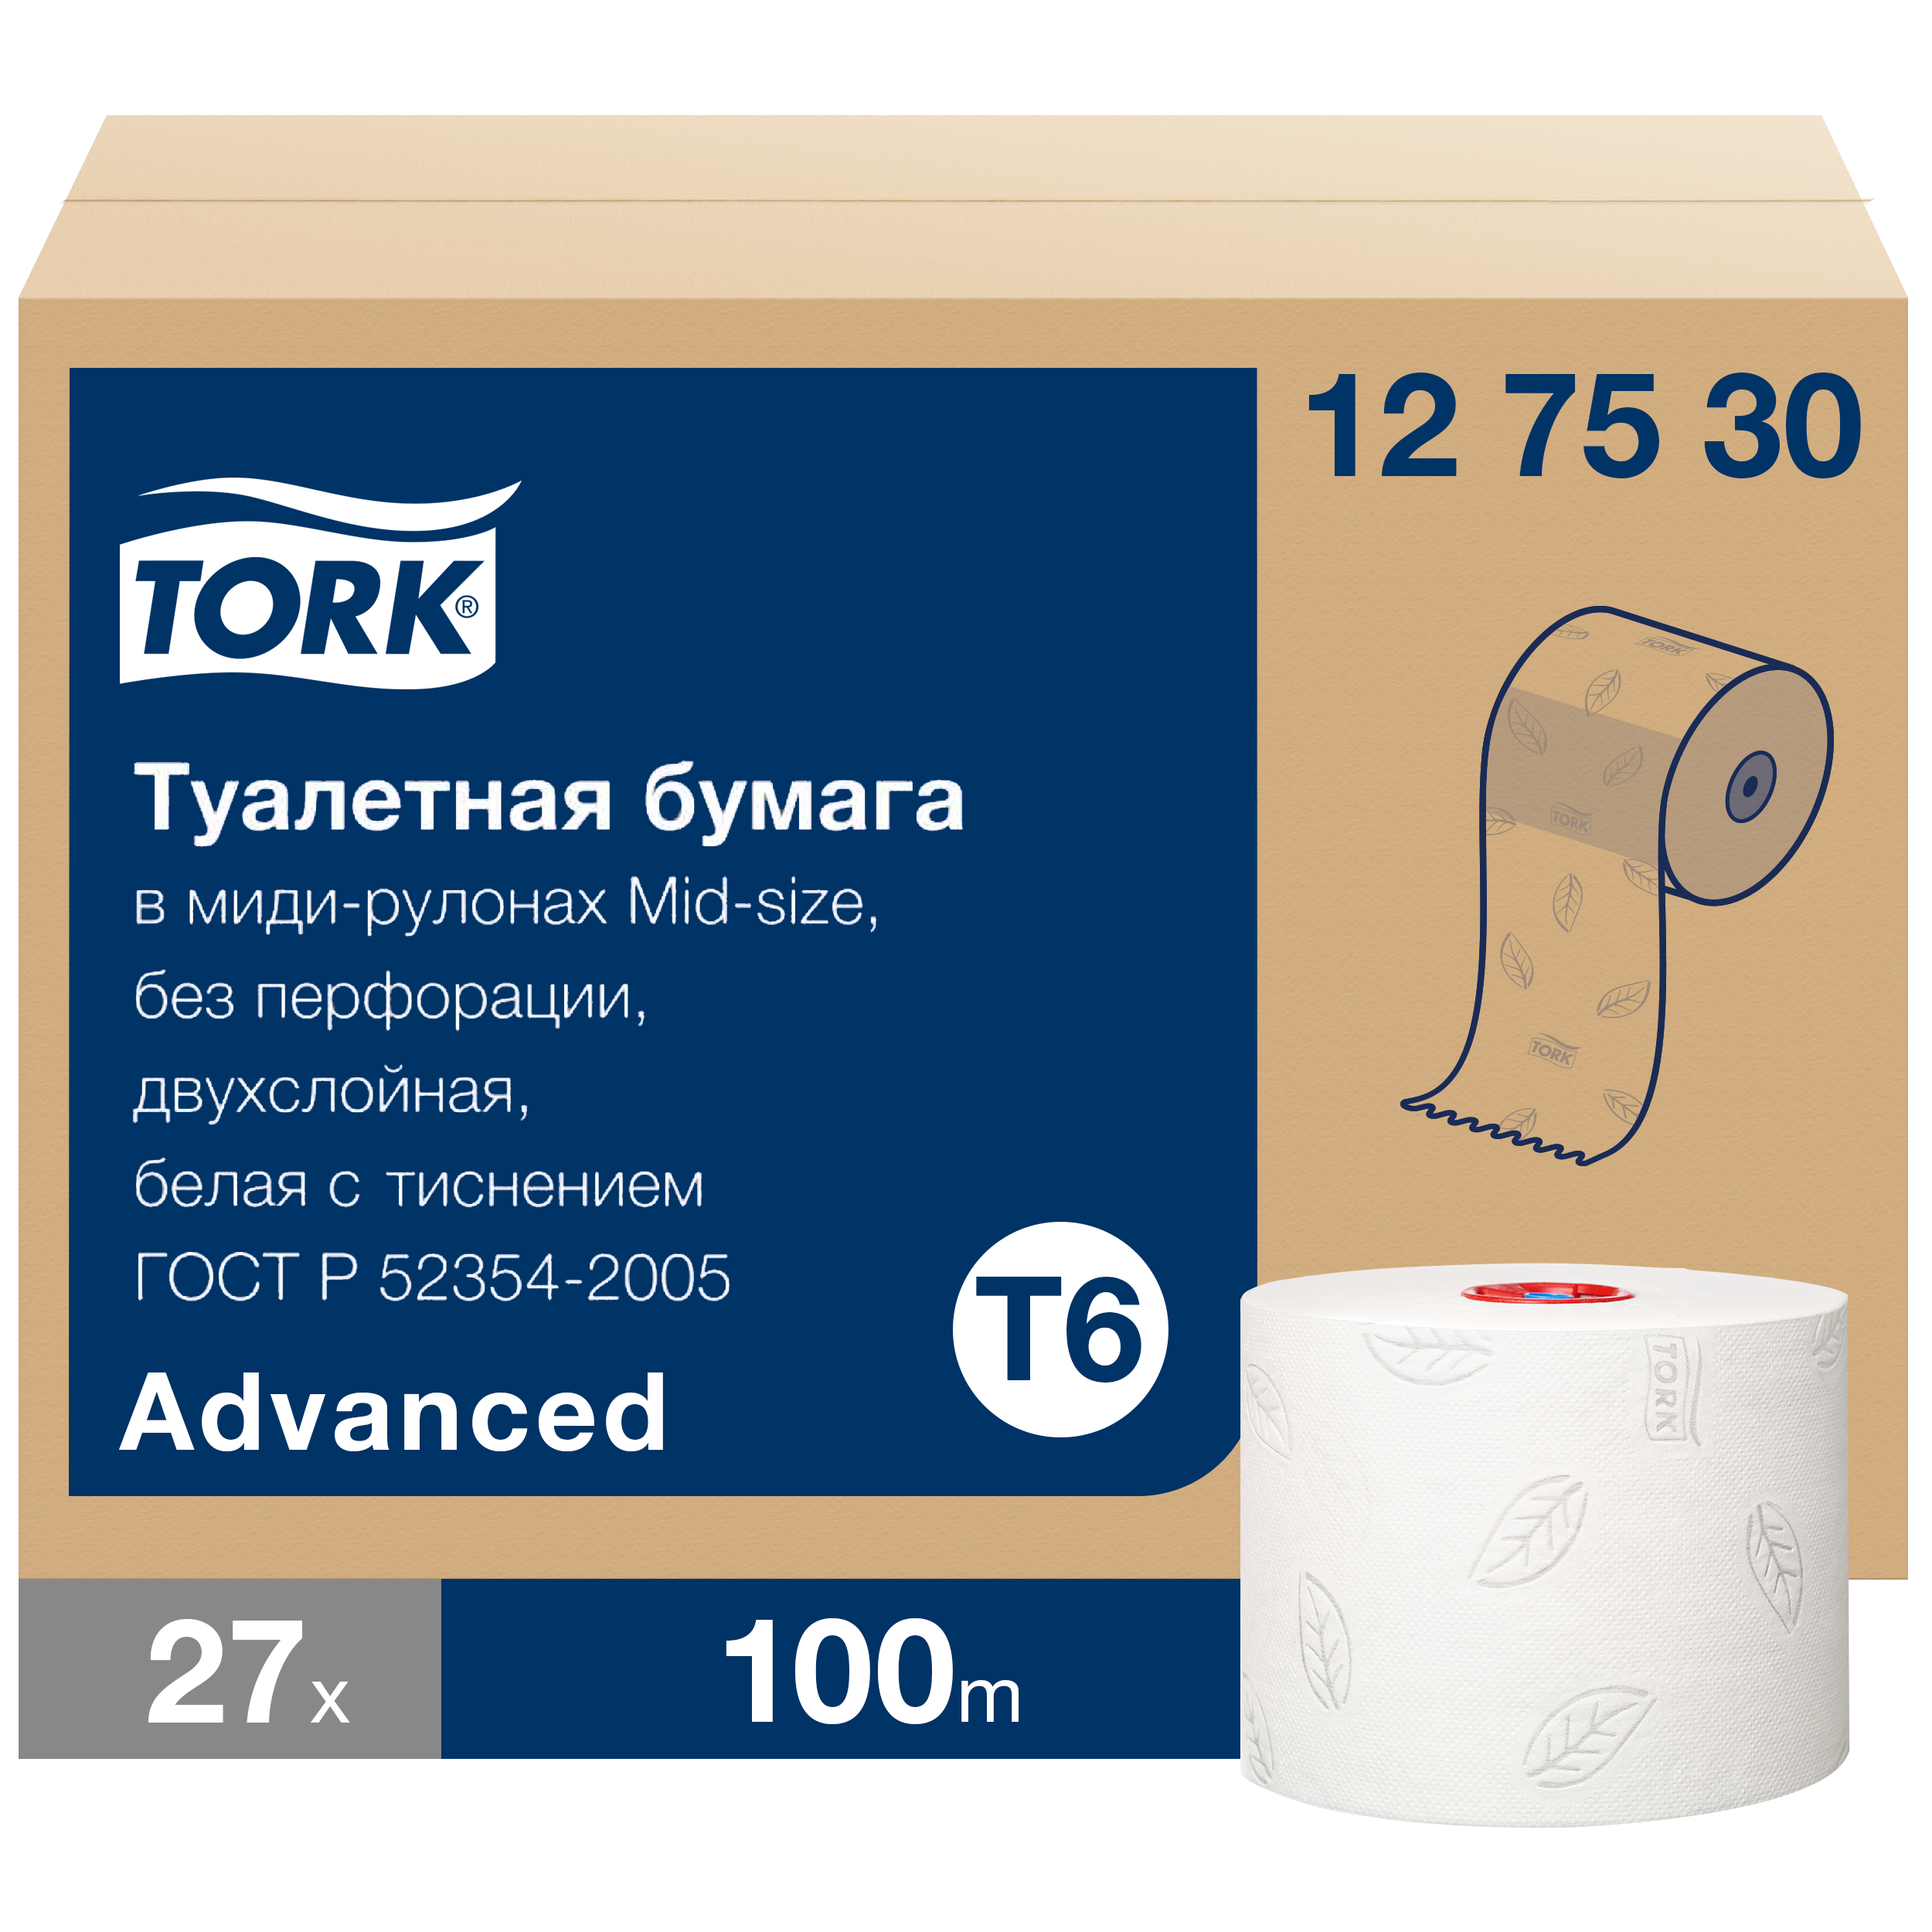 Бумага туалетная Tork Mid-size Advanced в рулонах, T6, 2 слоя, 100м, 27 рулонов туалетная бумага снежок 1 слой 73 м белая